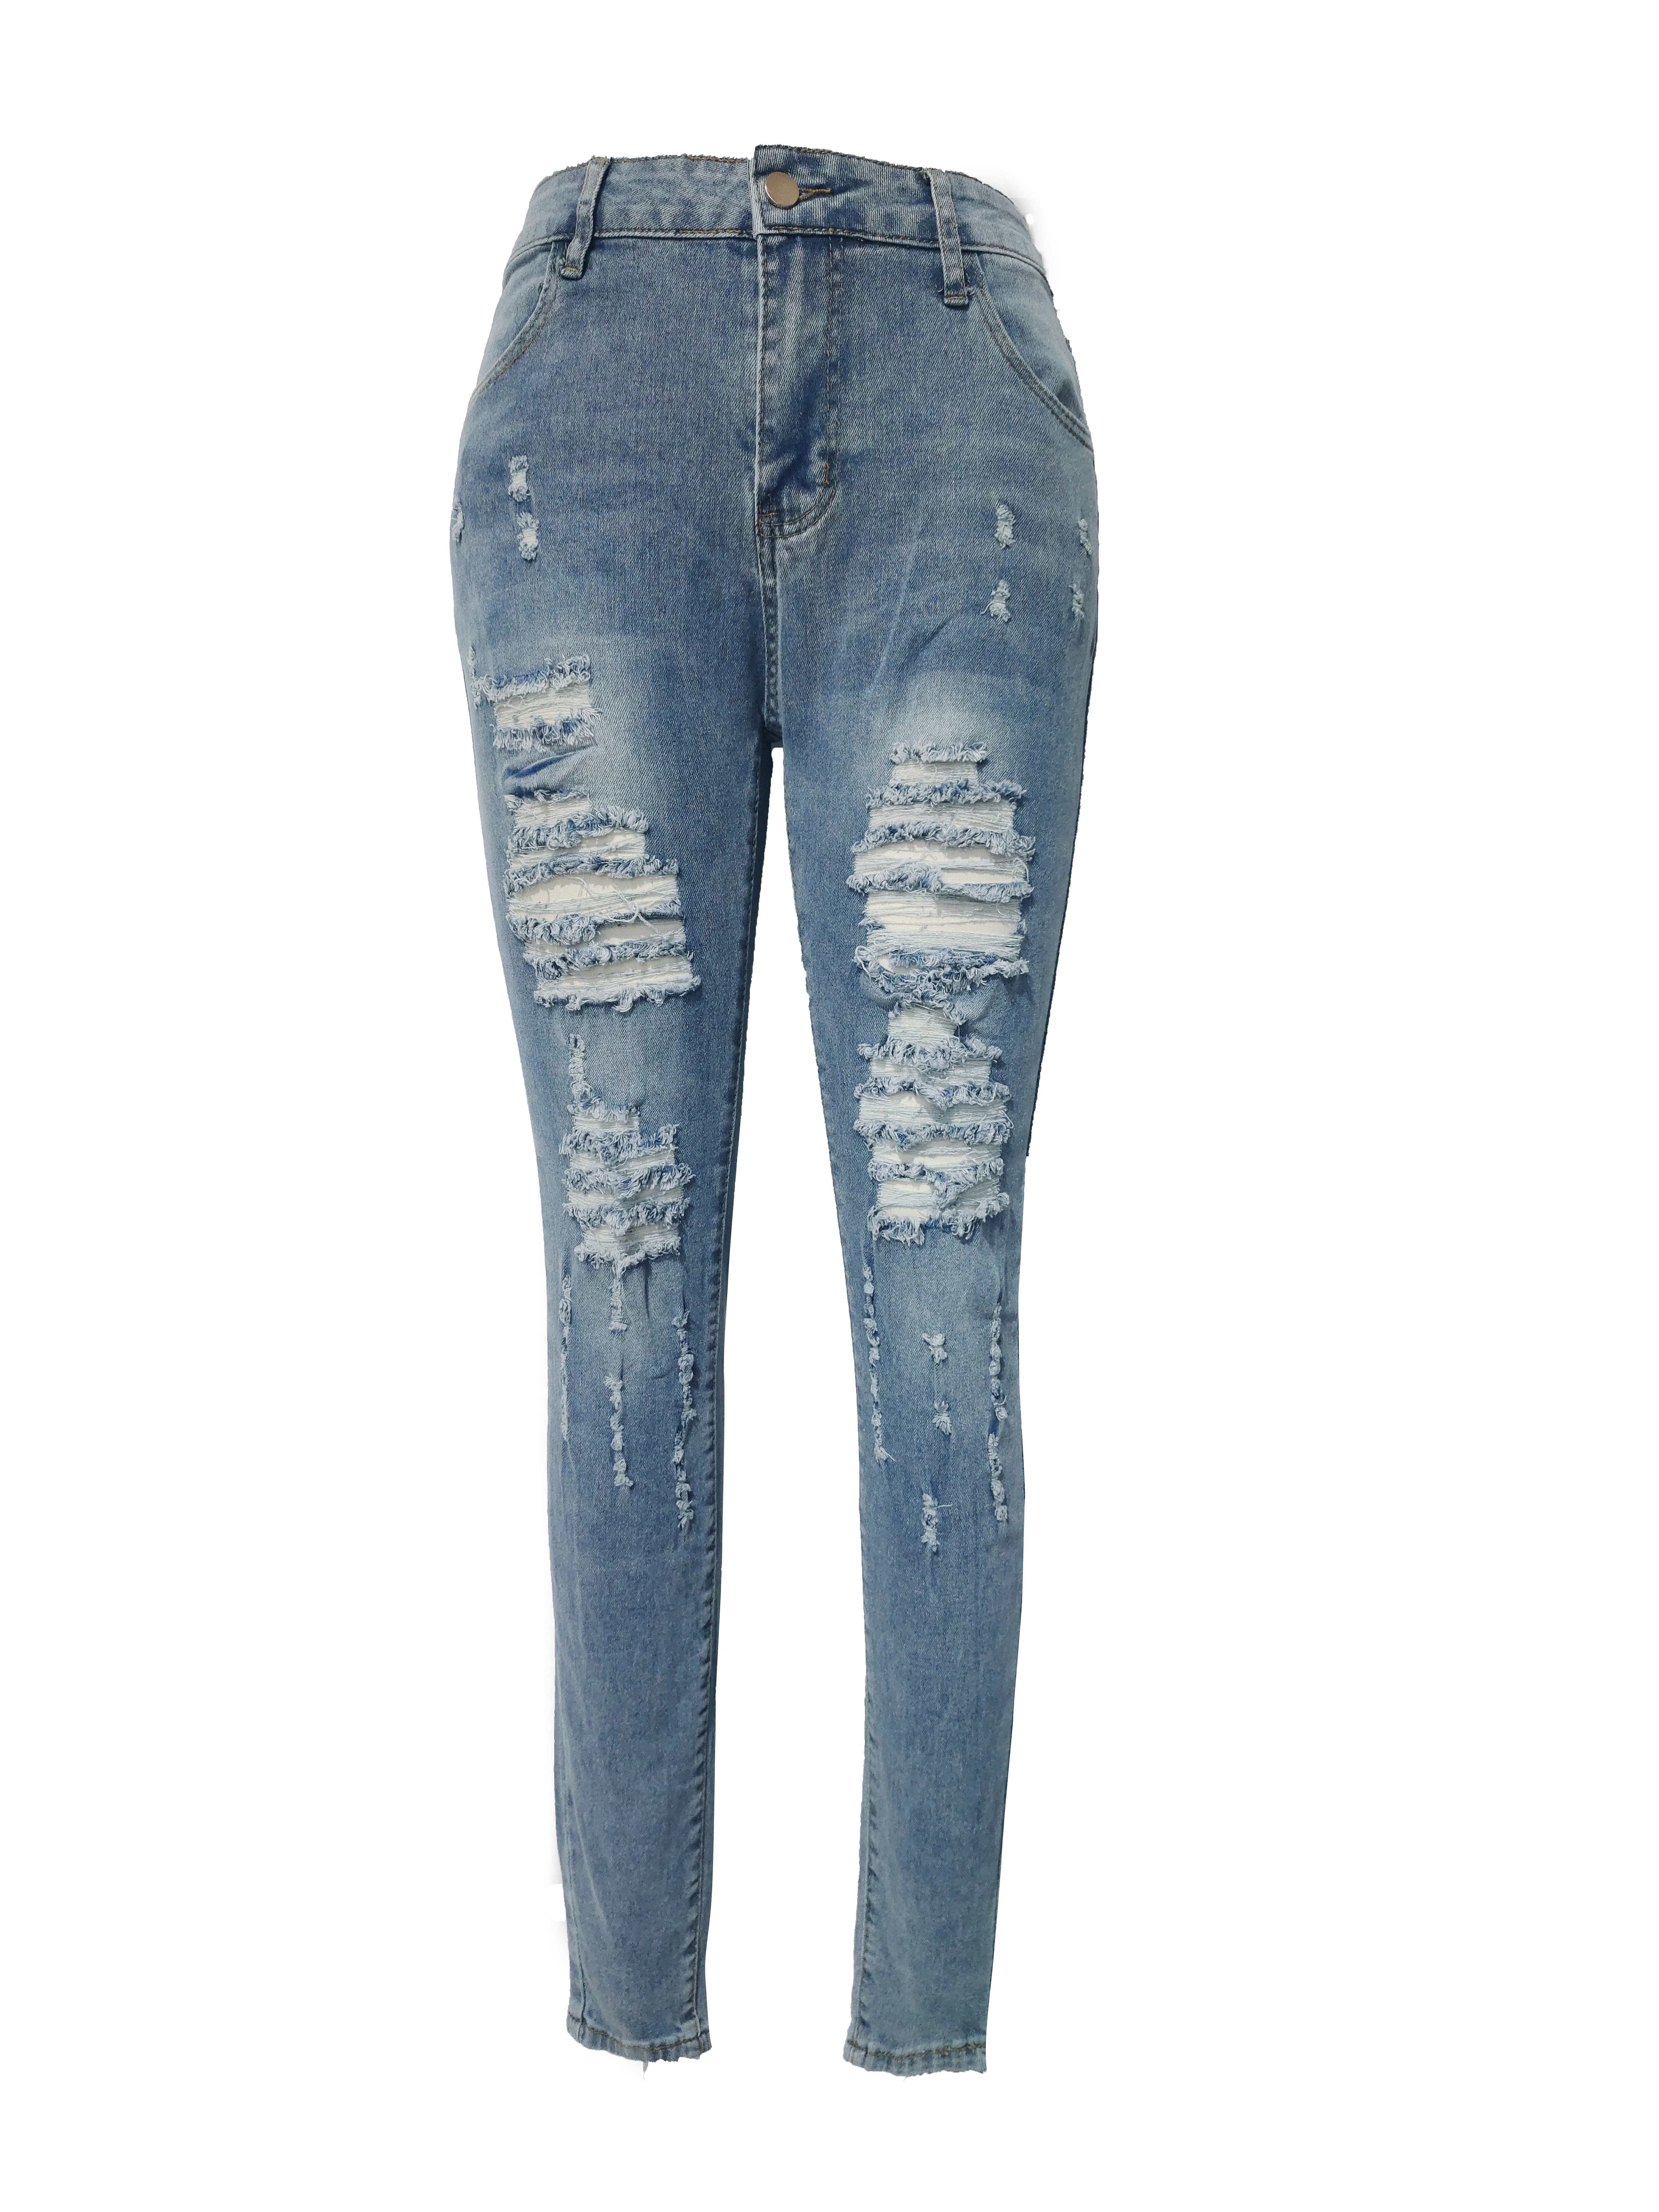 blue ripped holes skinny jeans distressed high waist slim fit slash pockets denim pants womens denim jeans clothing